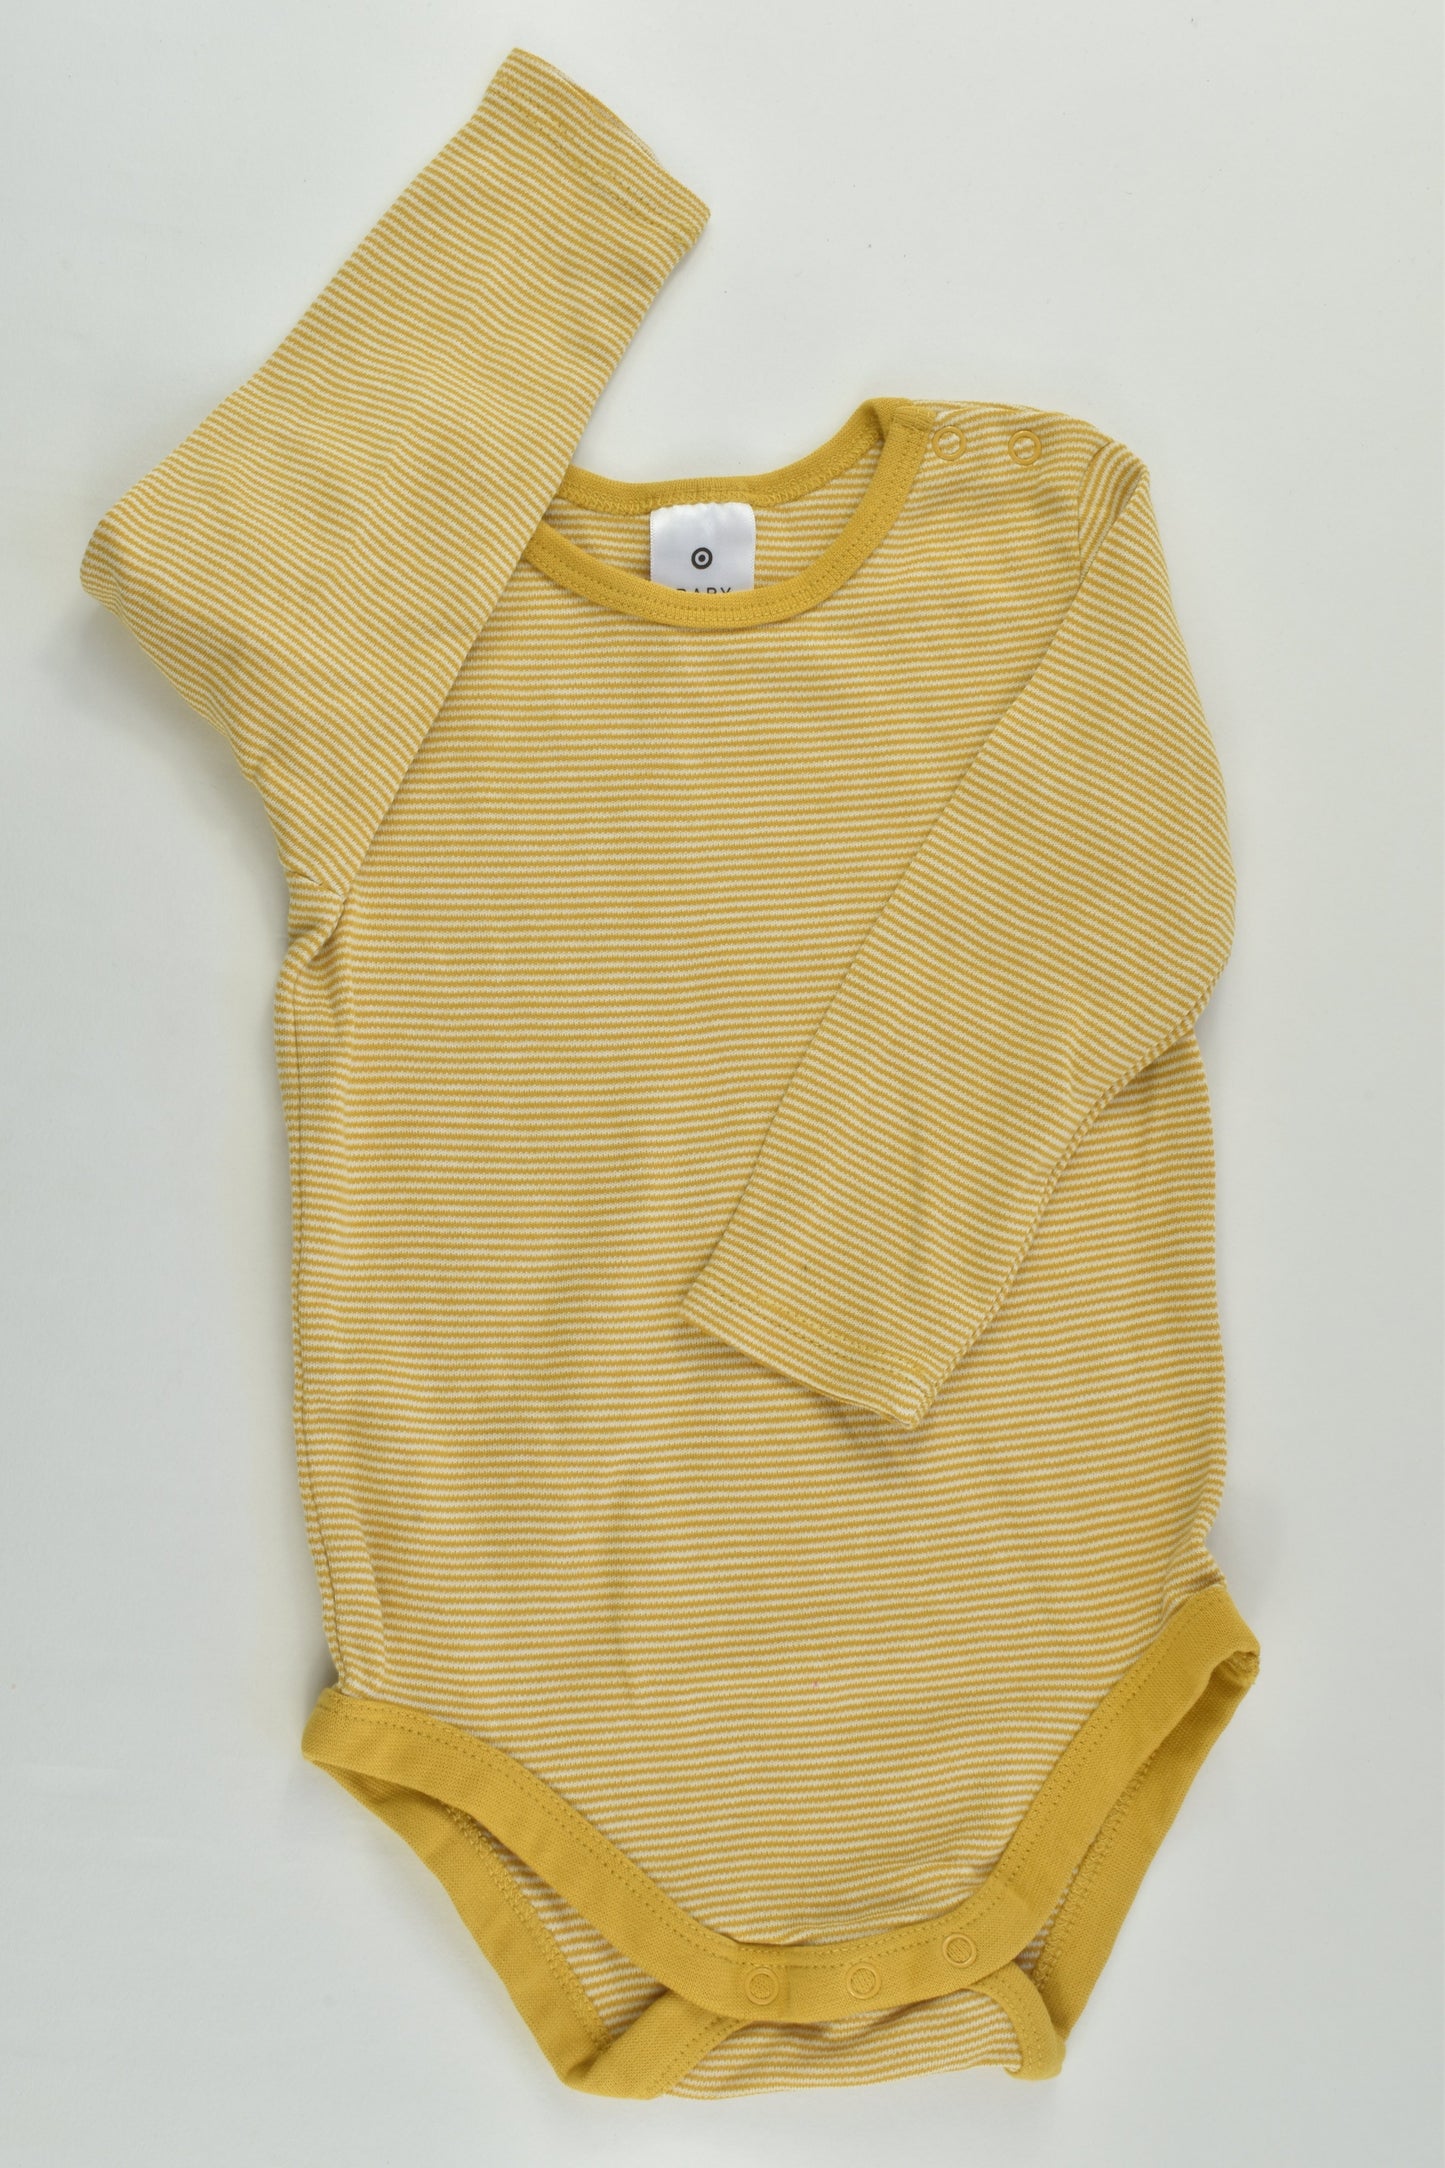 Target Size 0 (6-12 months) Mustard Stripes Bodysuit